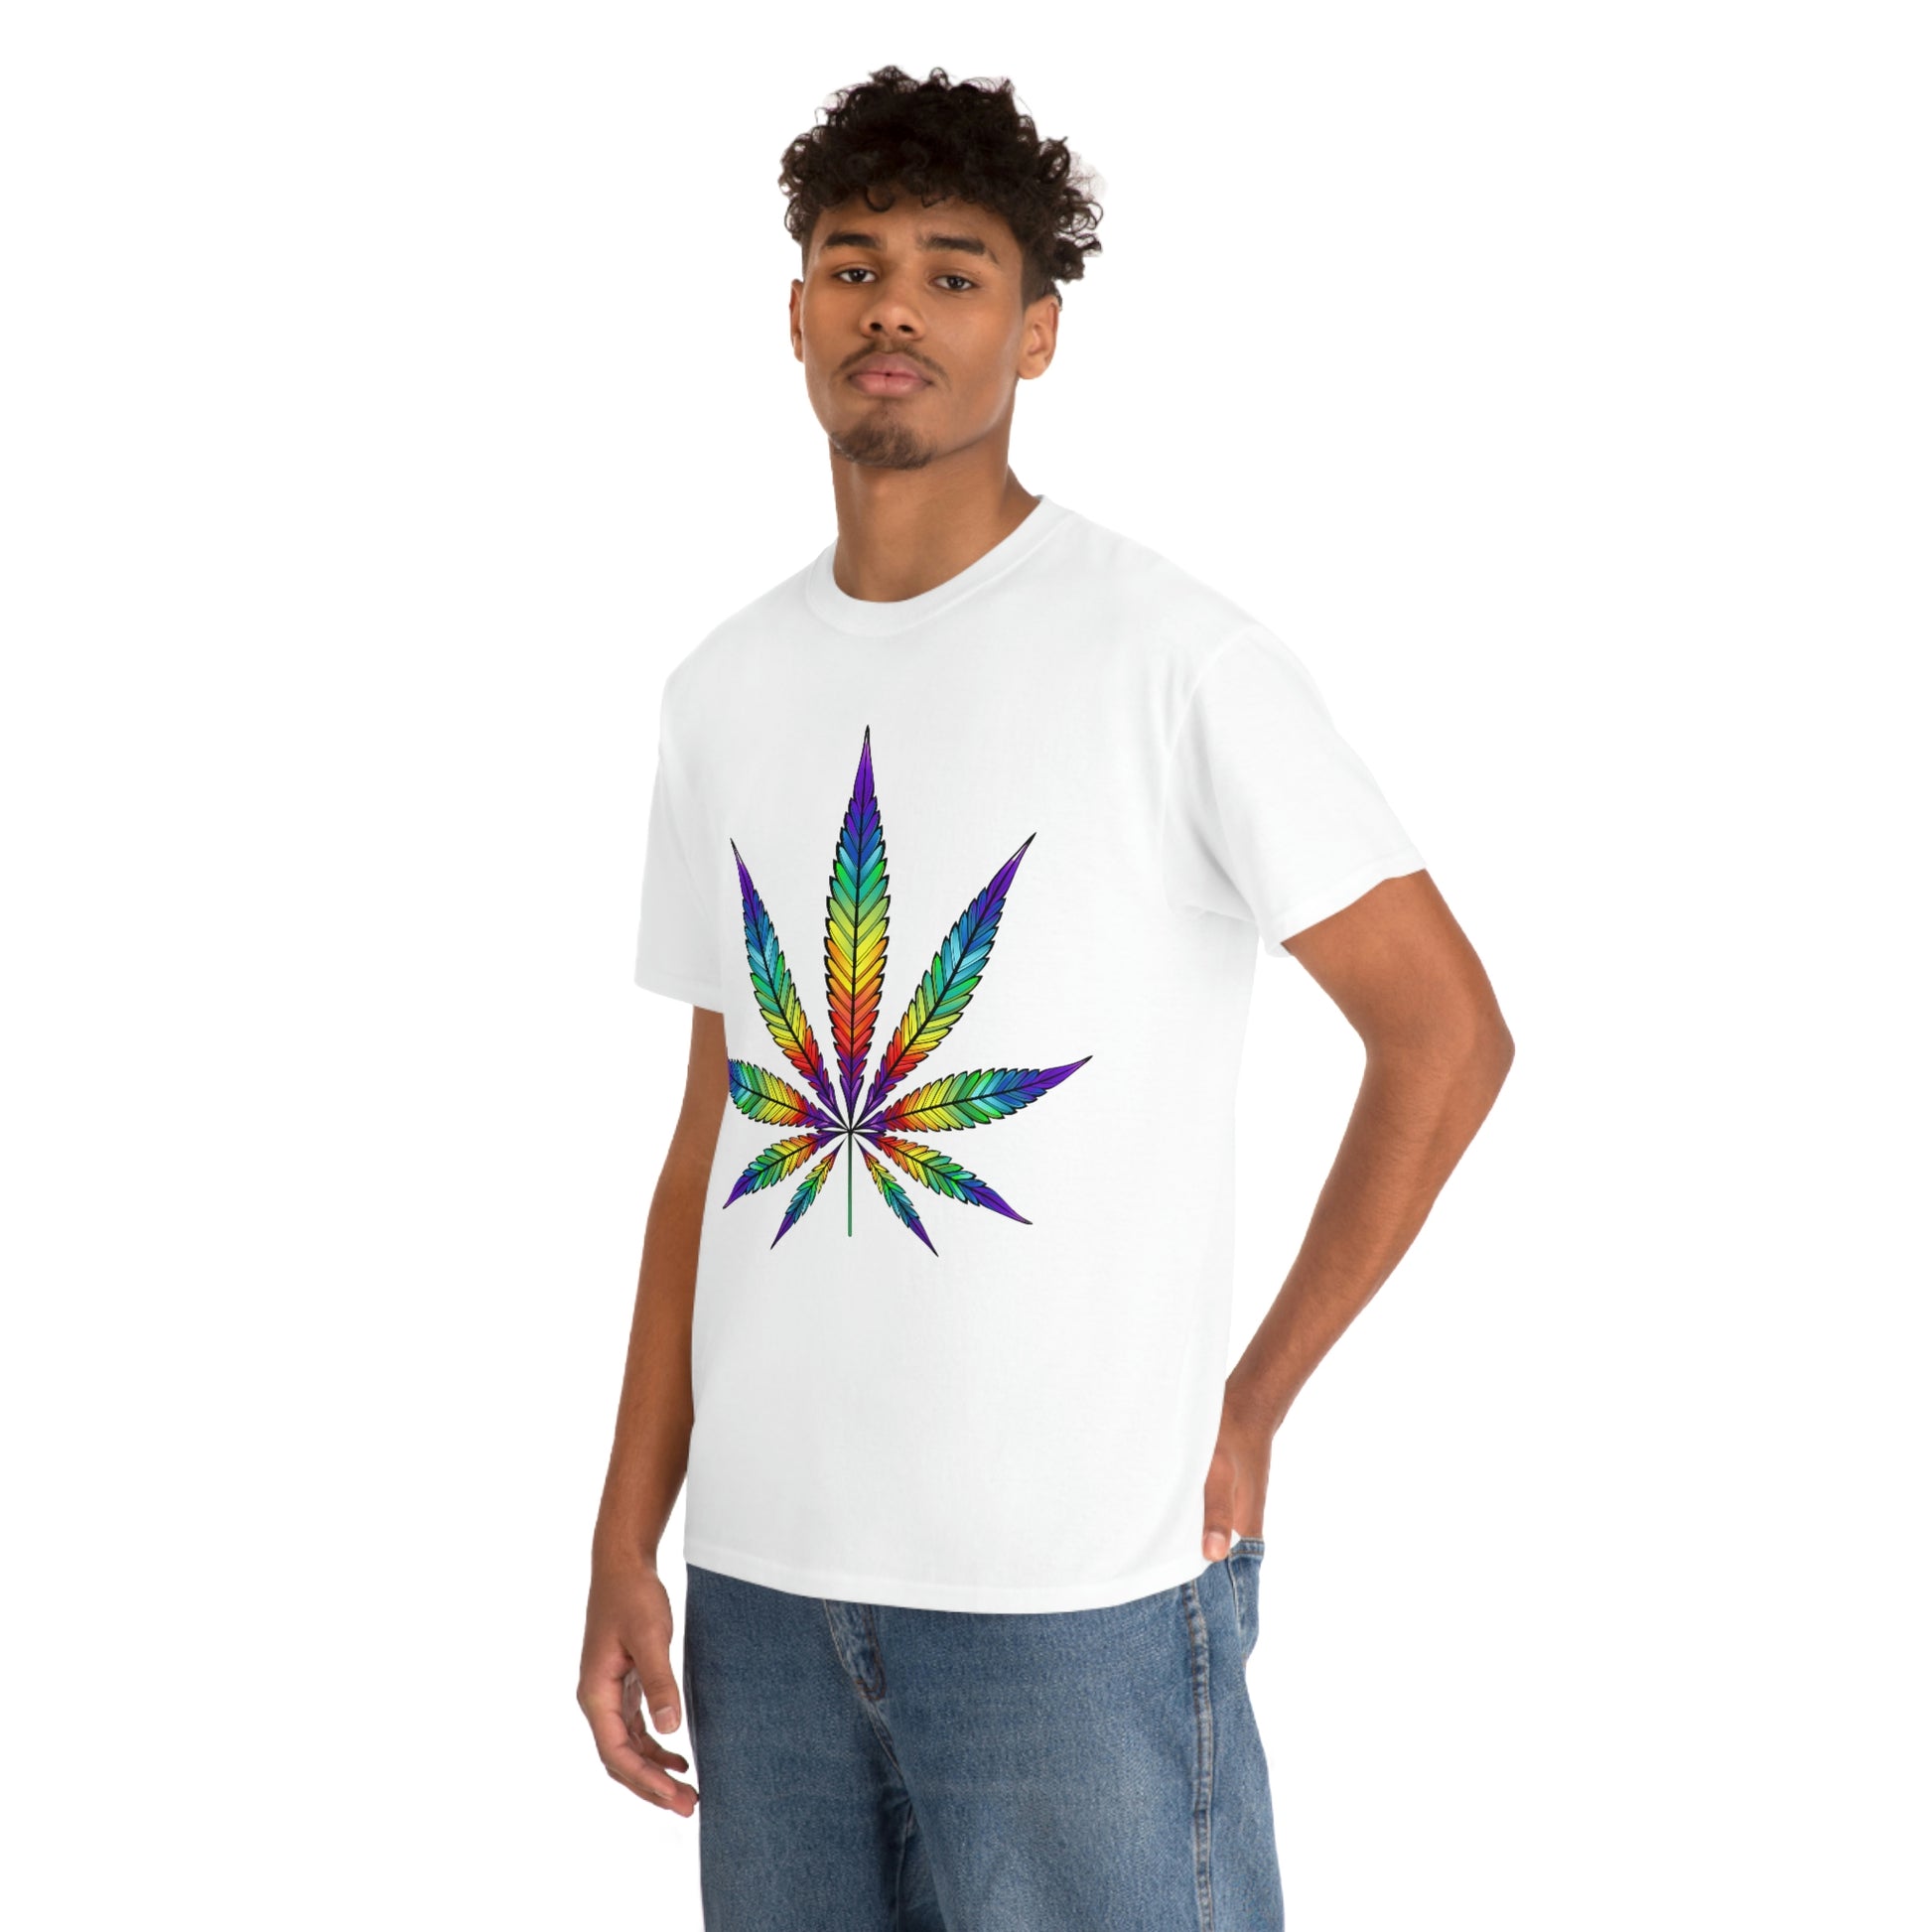 a man wearing a Rainbow Cannabis Leaf Tee.